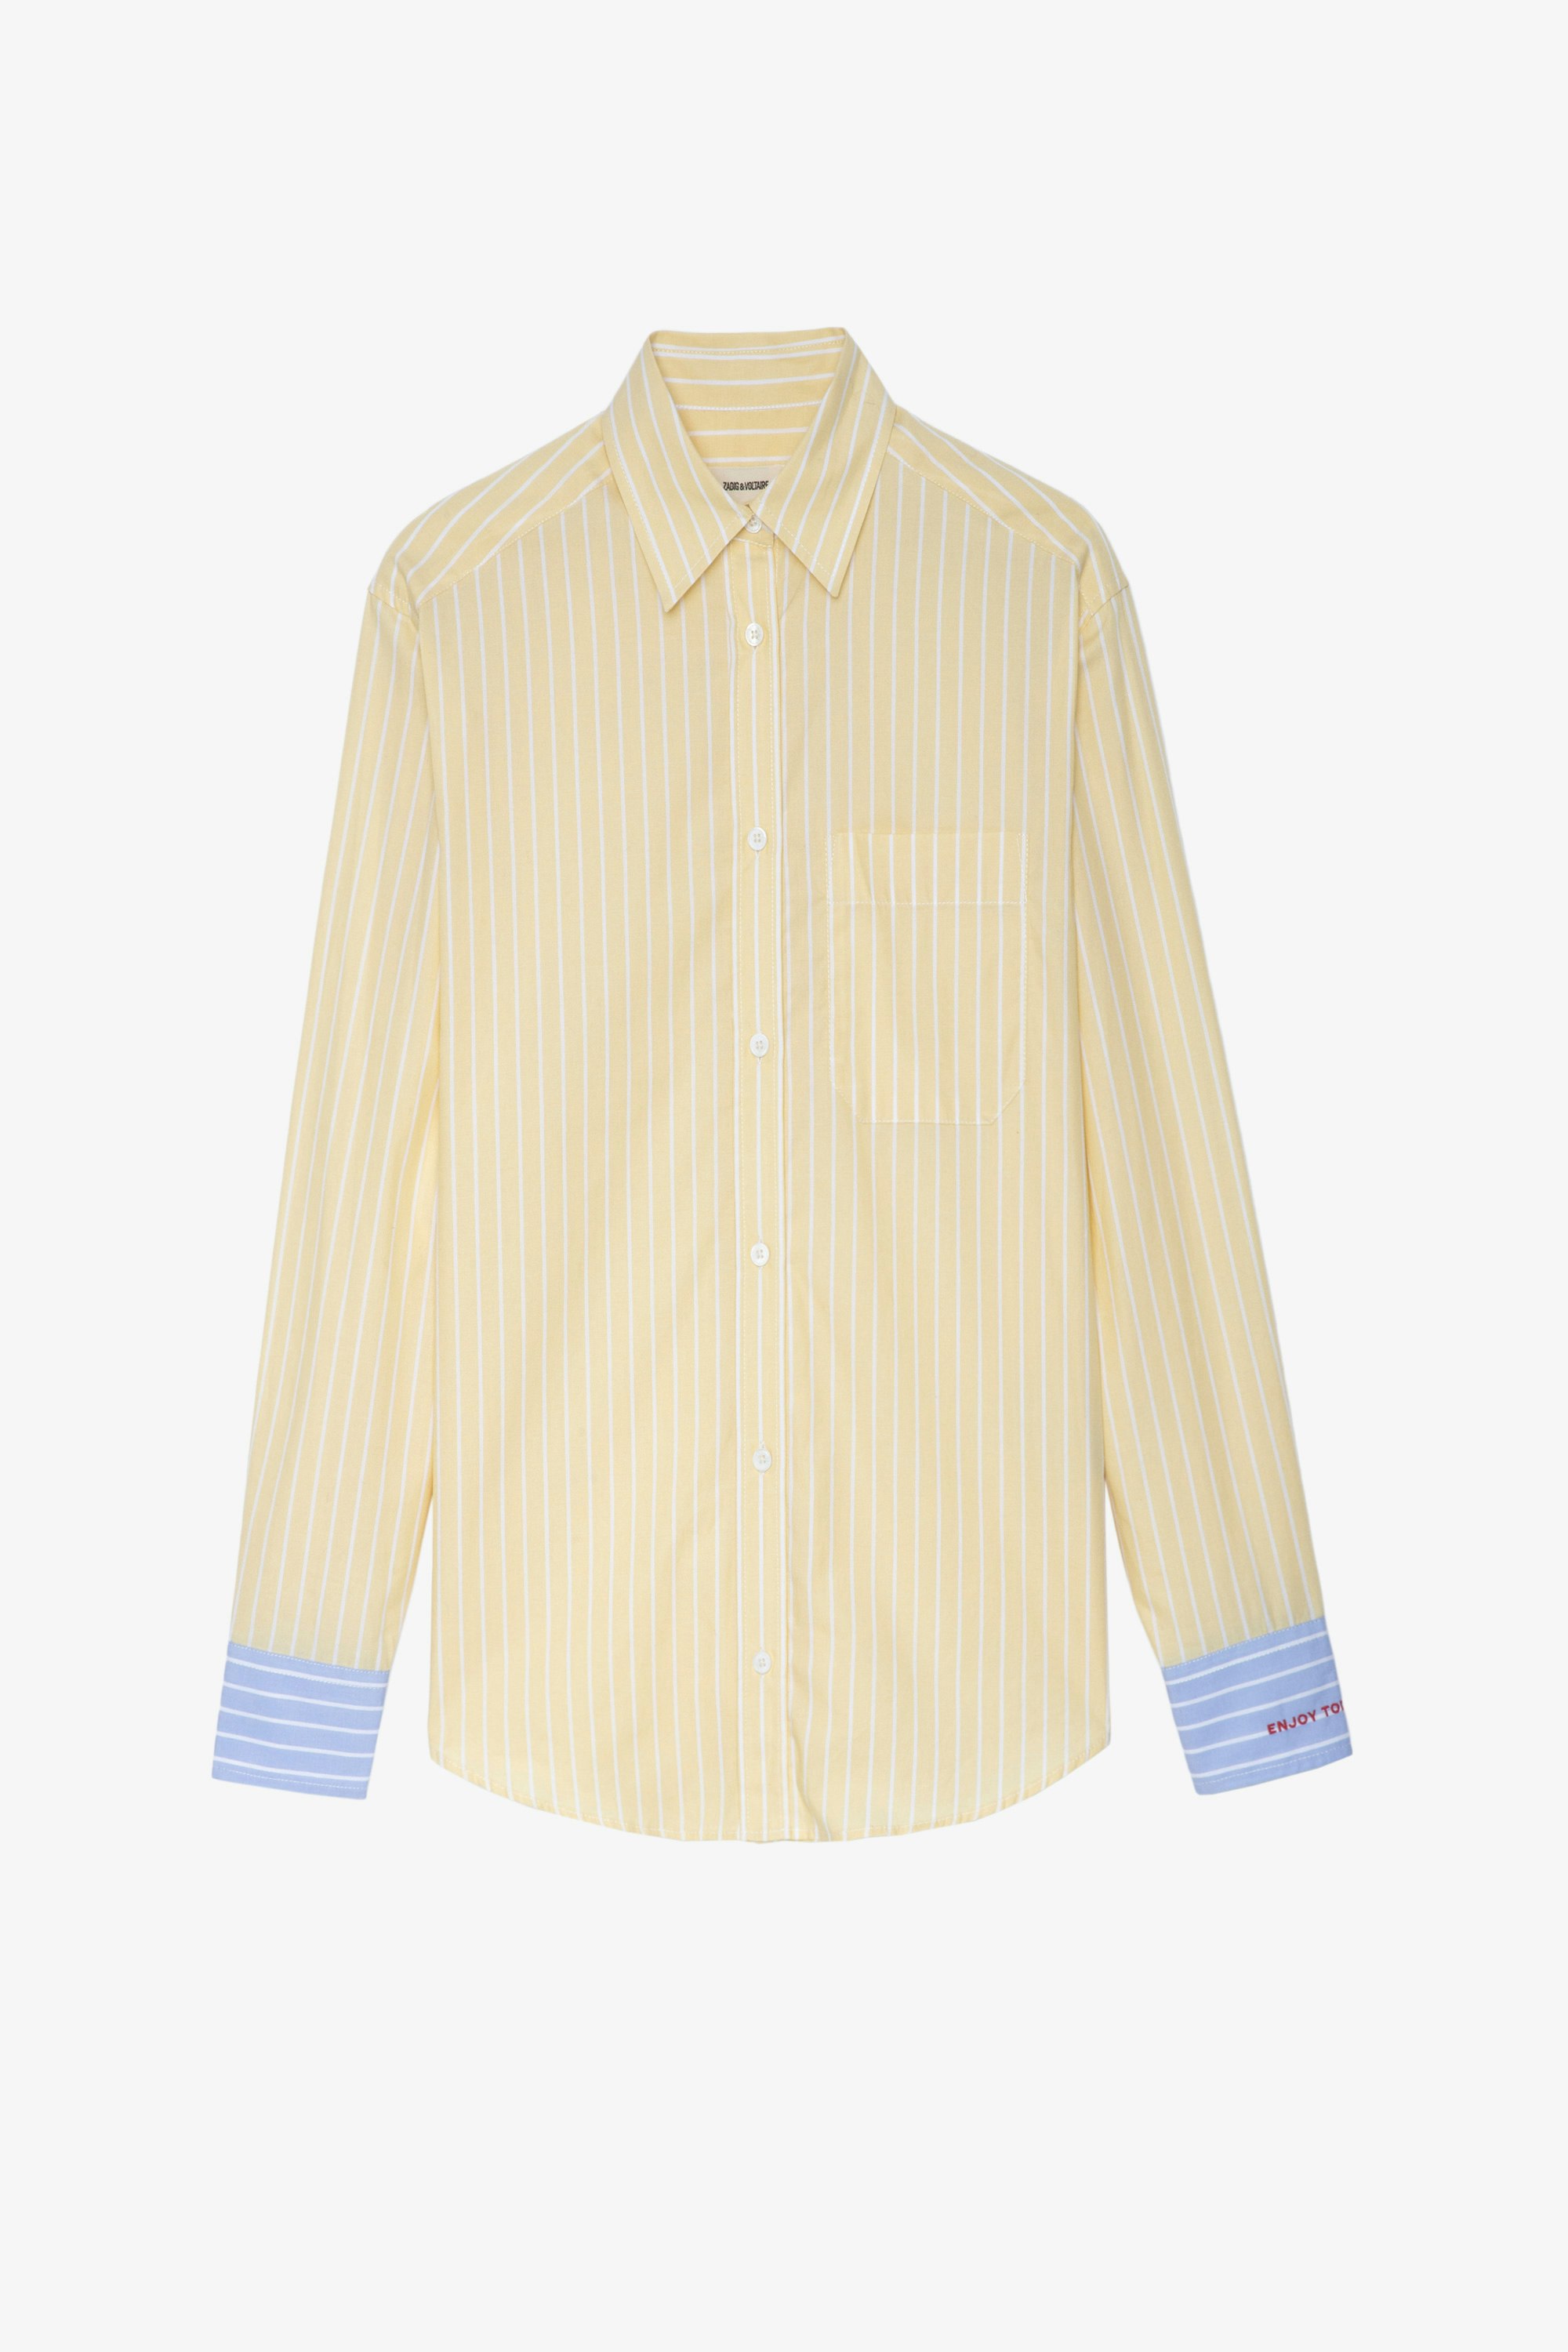 Tais Raye Pop シャツ Women’s yellow and pink striped cotton shirt